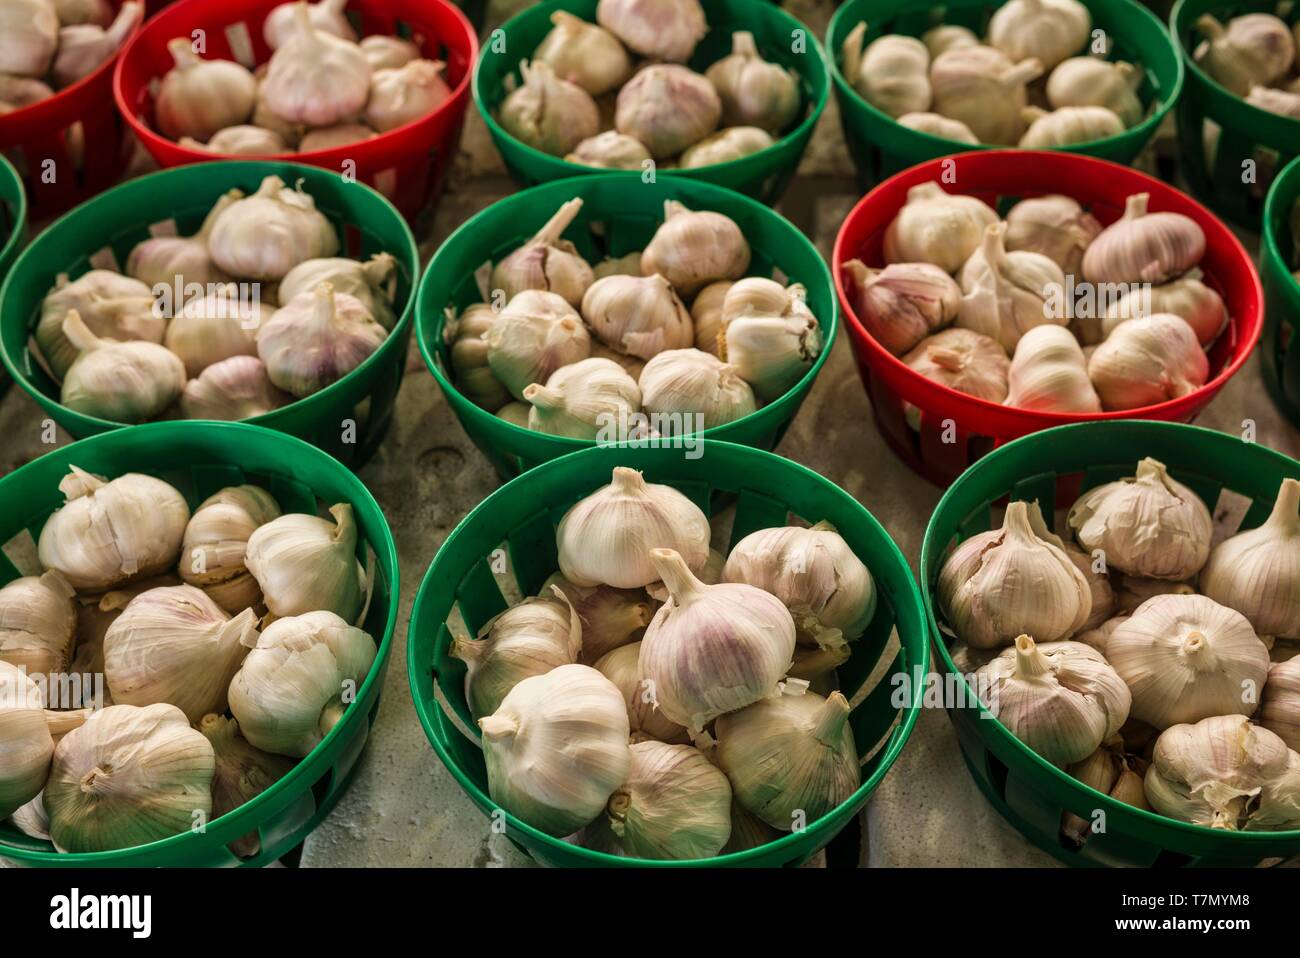 Canada, Quebec, Montreal, Little Italy, Marche Jean Talon market, autumn, cloves of garlic Stock Photo